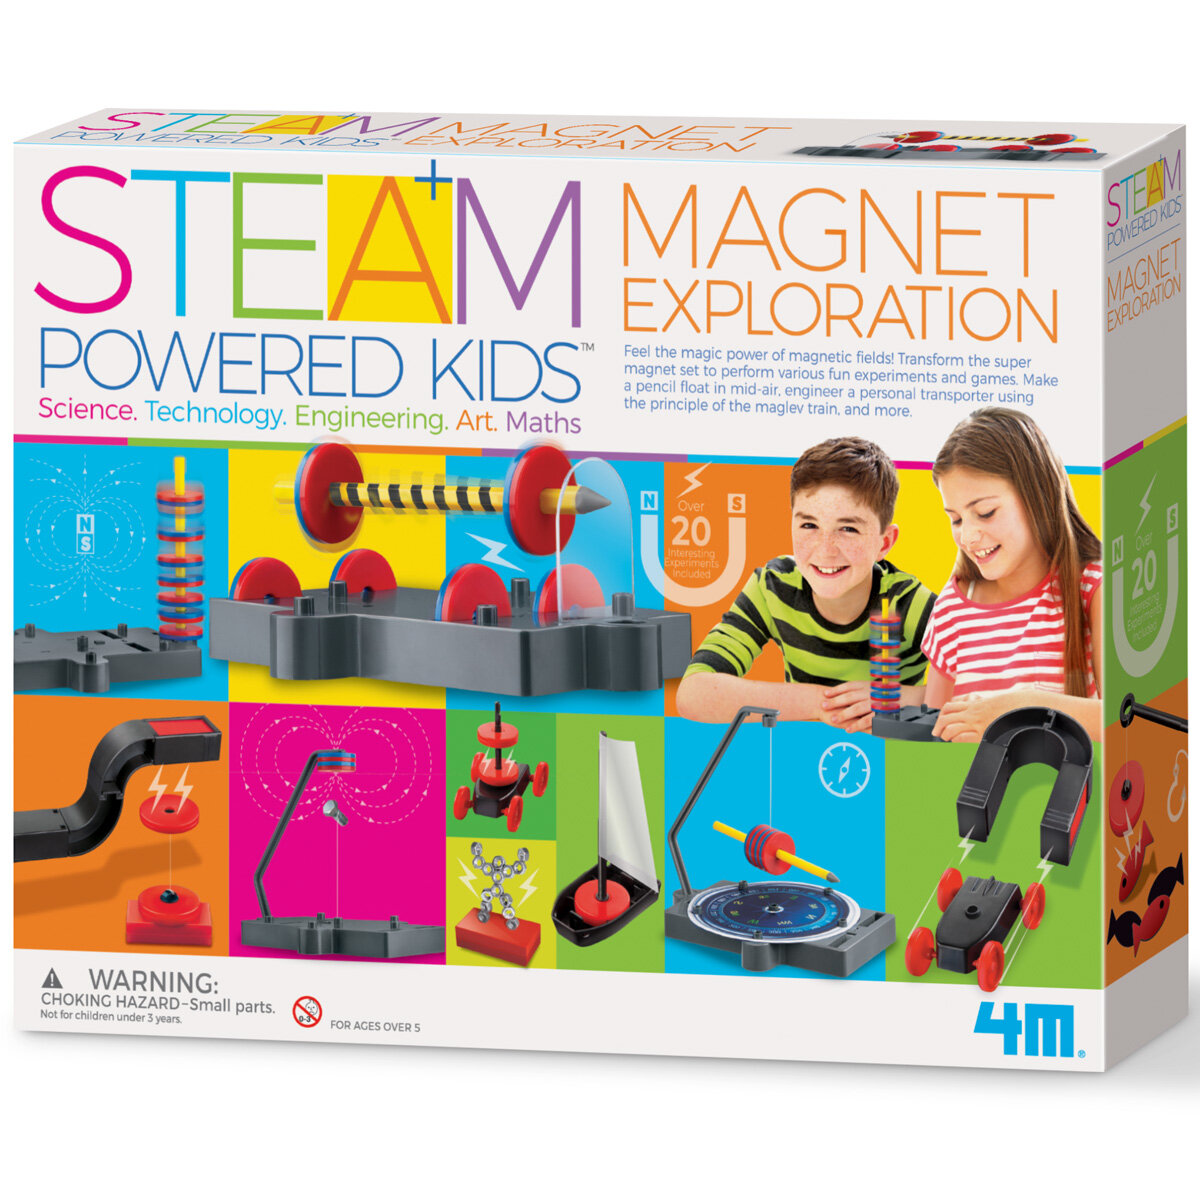 STEAM POWERED KIDS 磁力實驗趣味套裝 STEAM玩具|教育玩具|兒童益智玩具|親子互動|小學生學習|STEM玩具|DIY小實驗|兒童生日禮物|STEM教育玩具